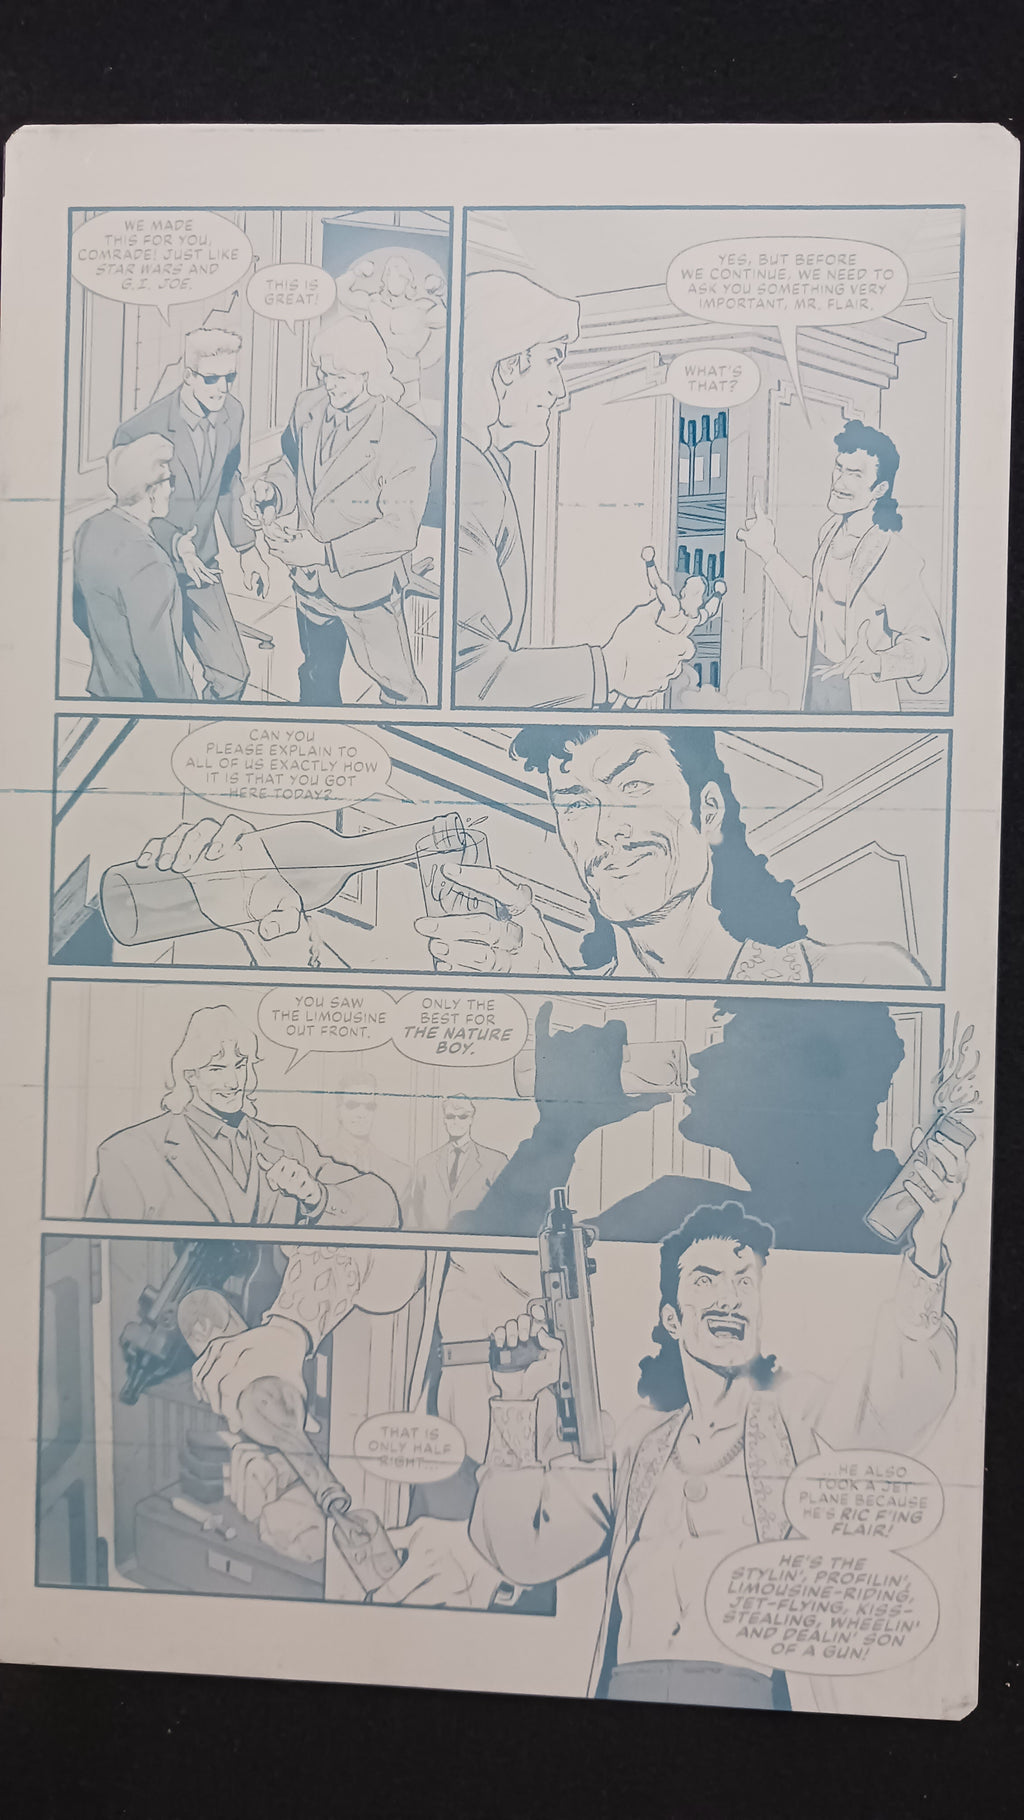 Code Name Ric Flair #1 - NYCC - Page 22 - PRESSWORKS - Comic Art - Printer Plate - Cyan